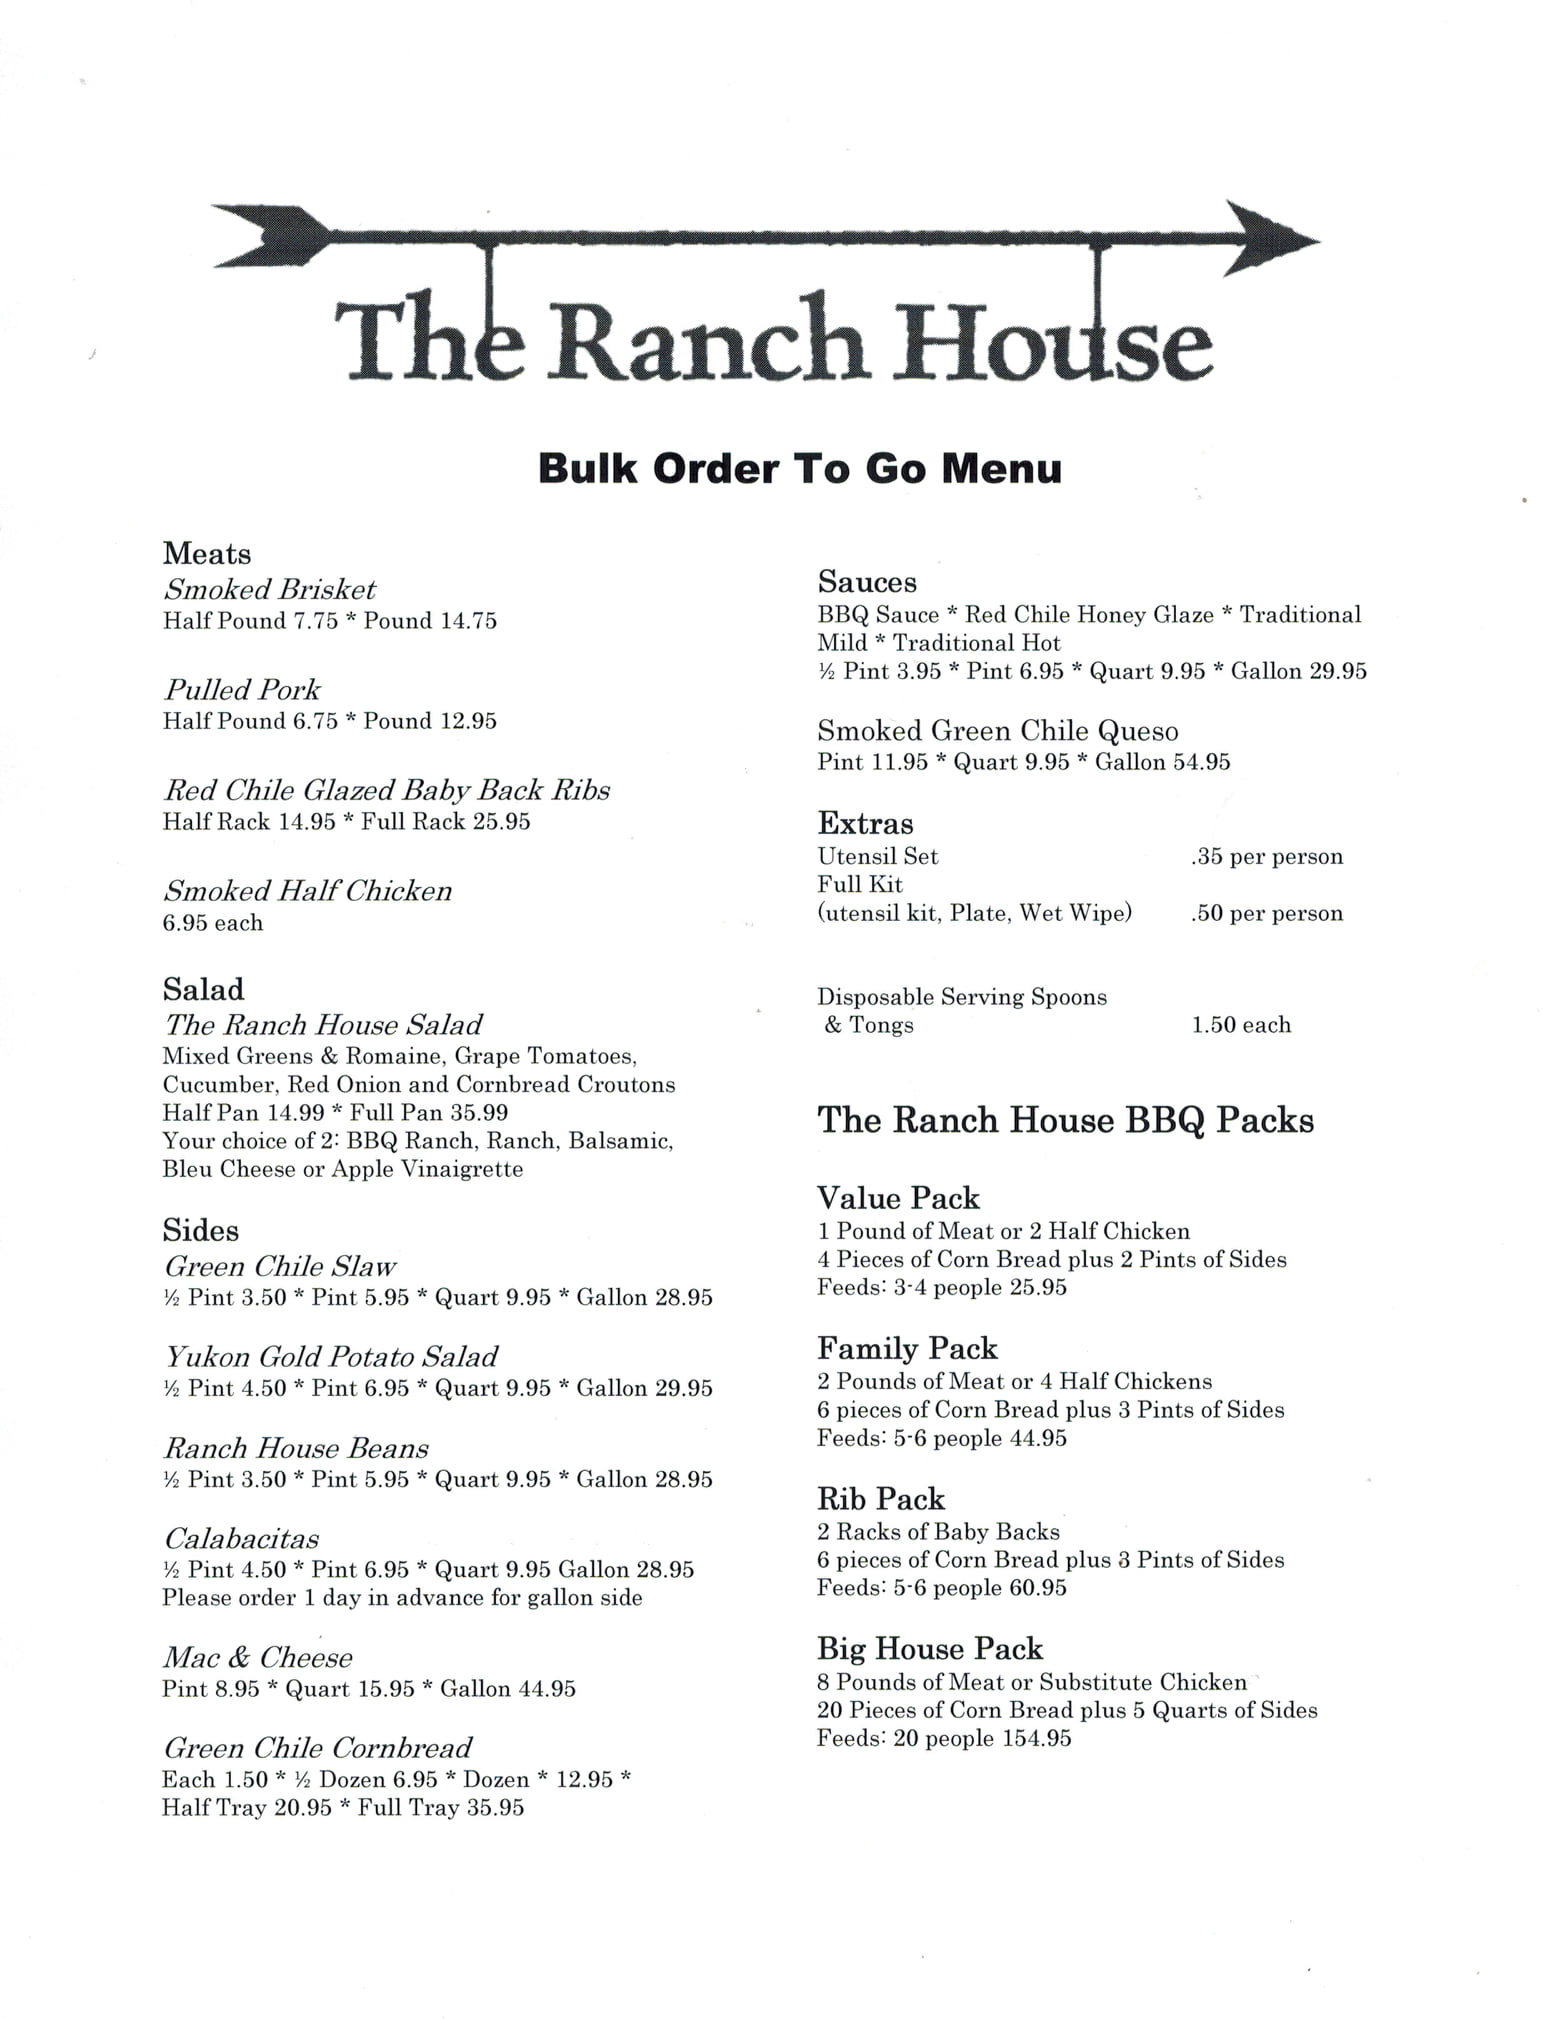 The Ranch House General Menu